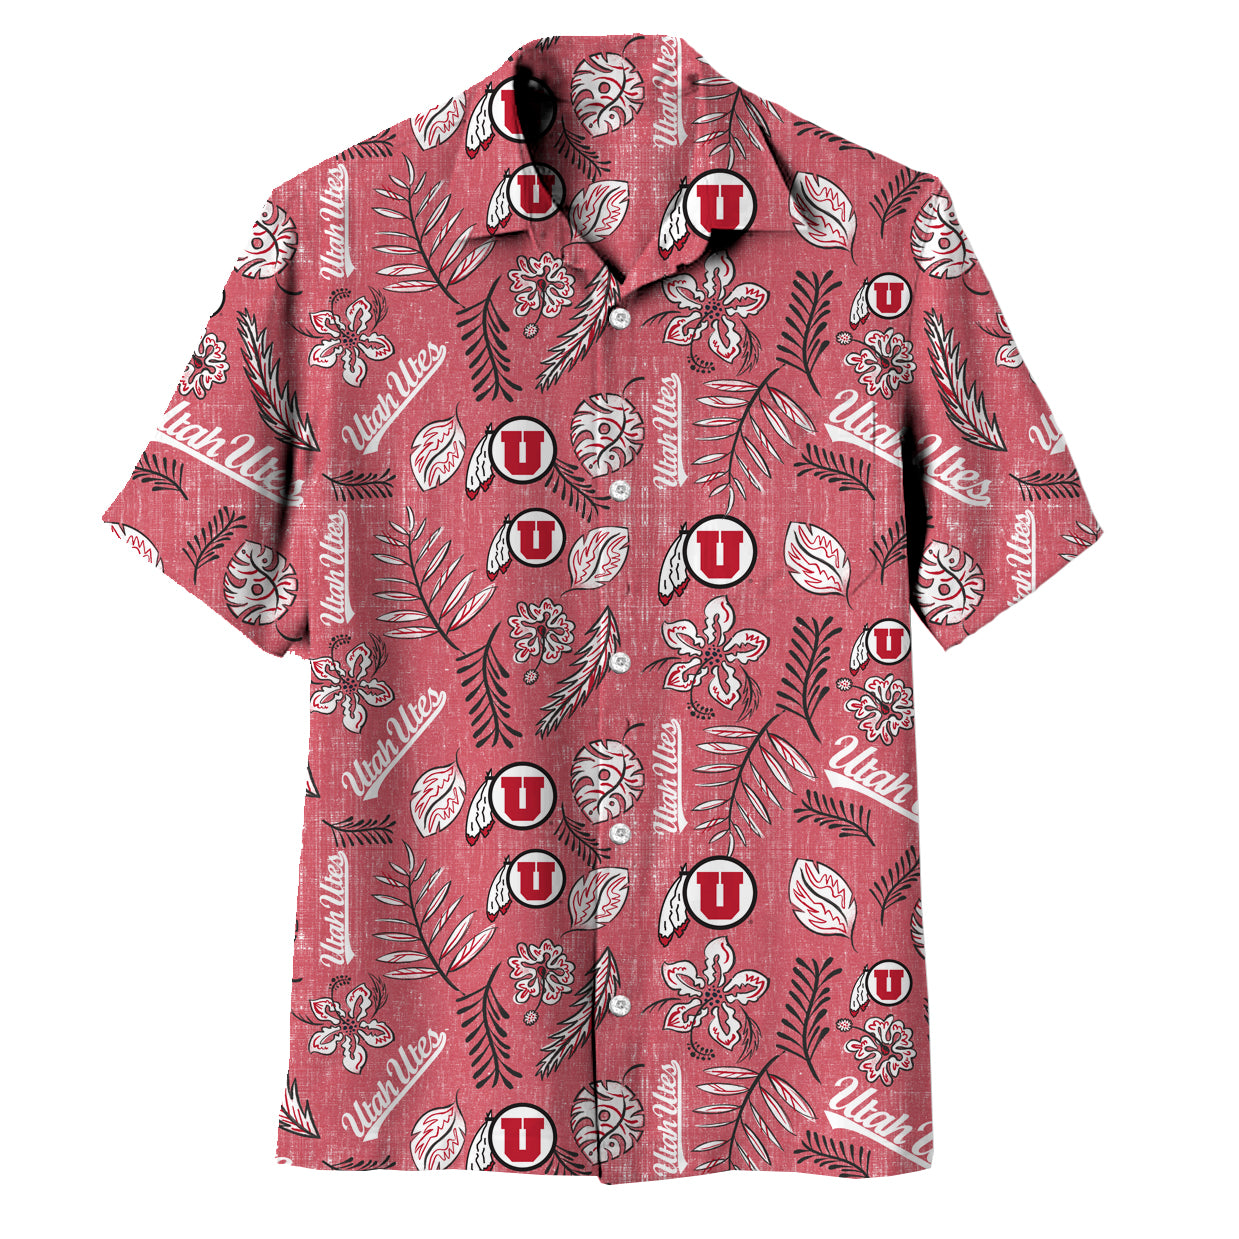 Stanford University Toddler Cardinal Short Sleeve T-Shirt | Wes & Willy | Bullseye Red | 2 Toddler